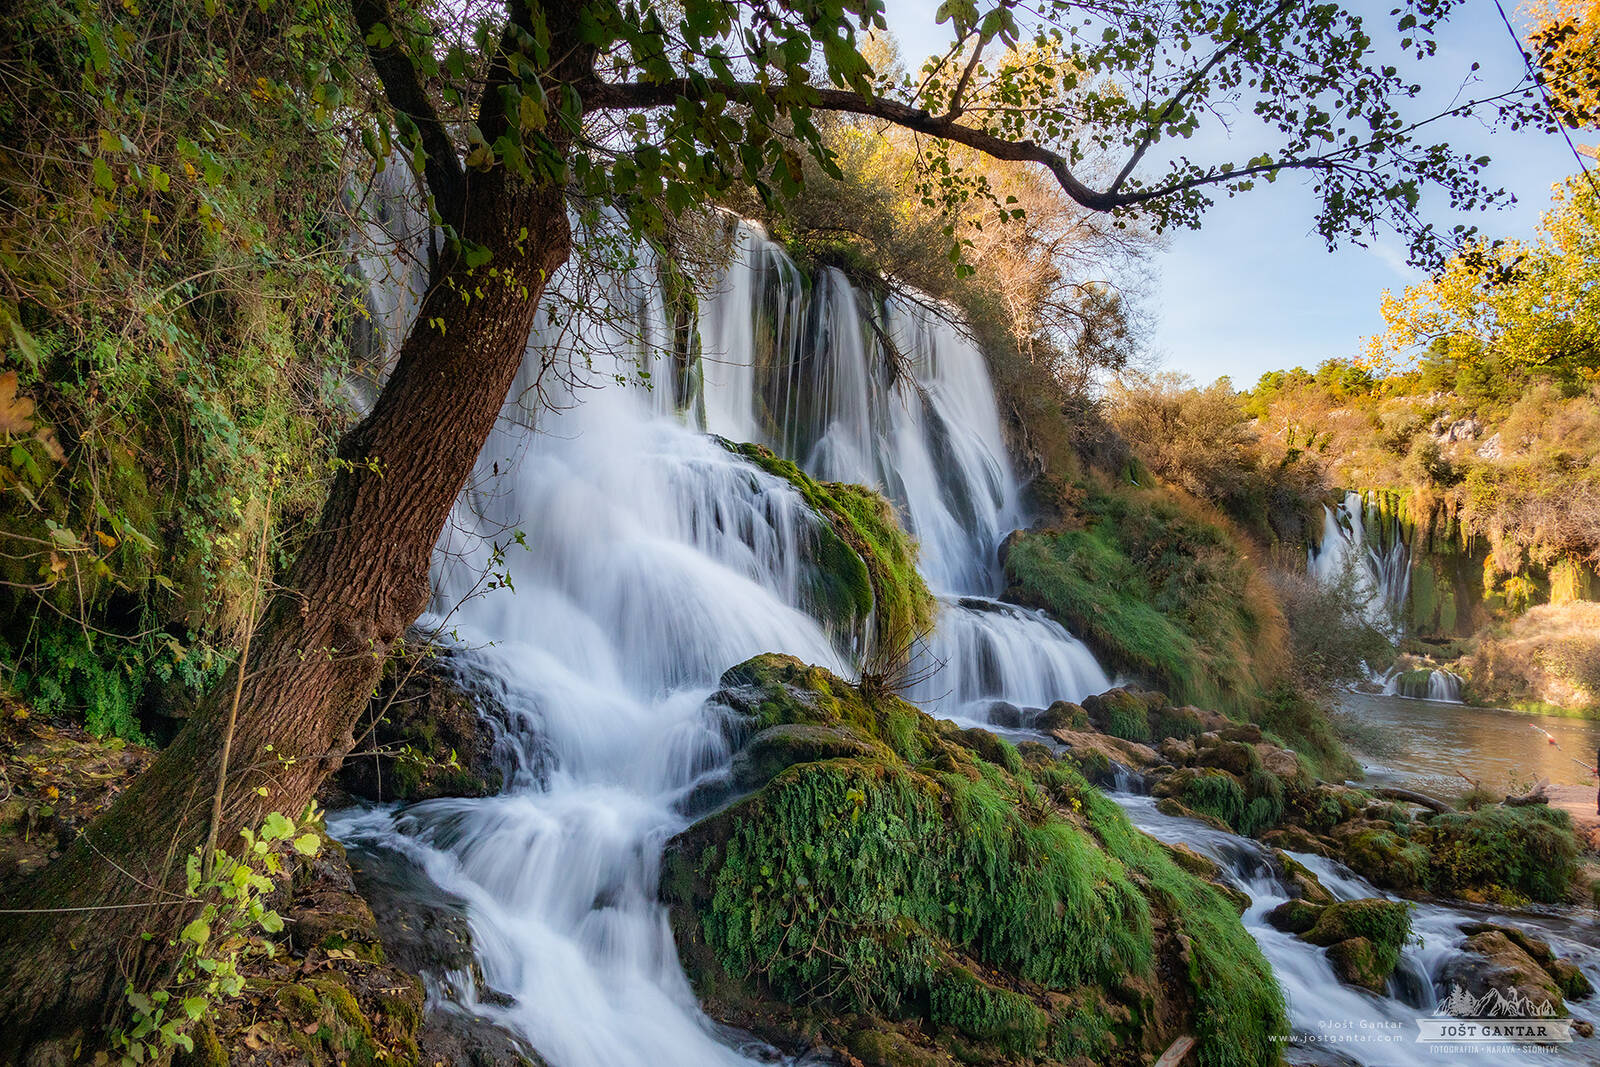 Image of Kravica Waterfalls by Jošt Gantar